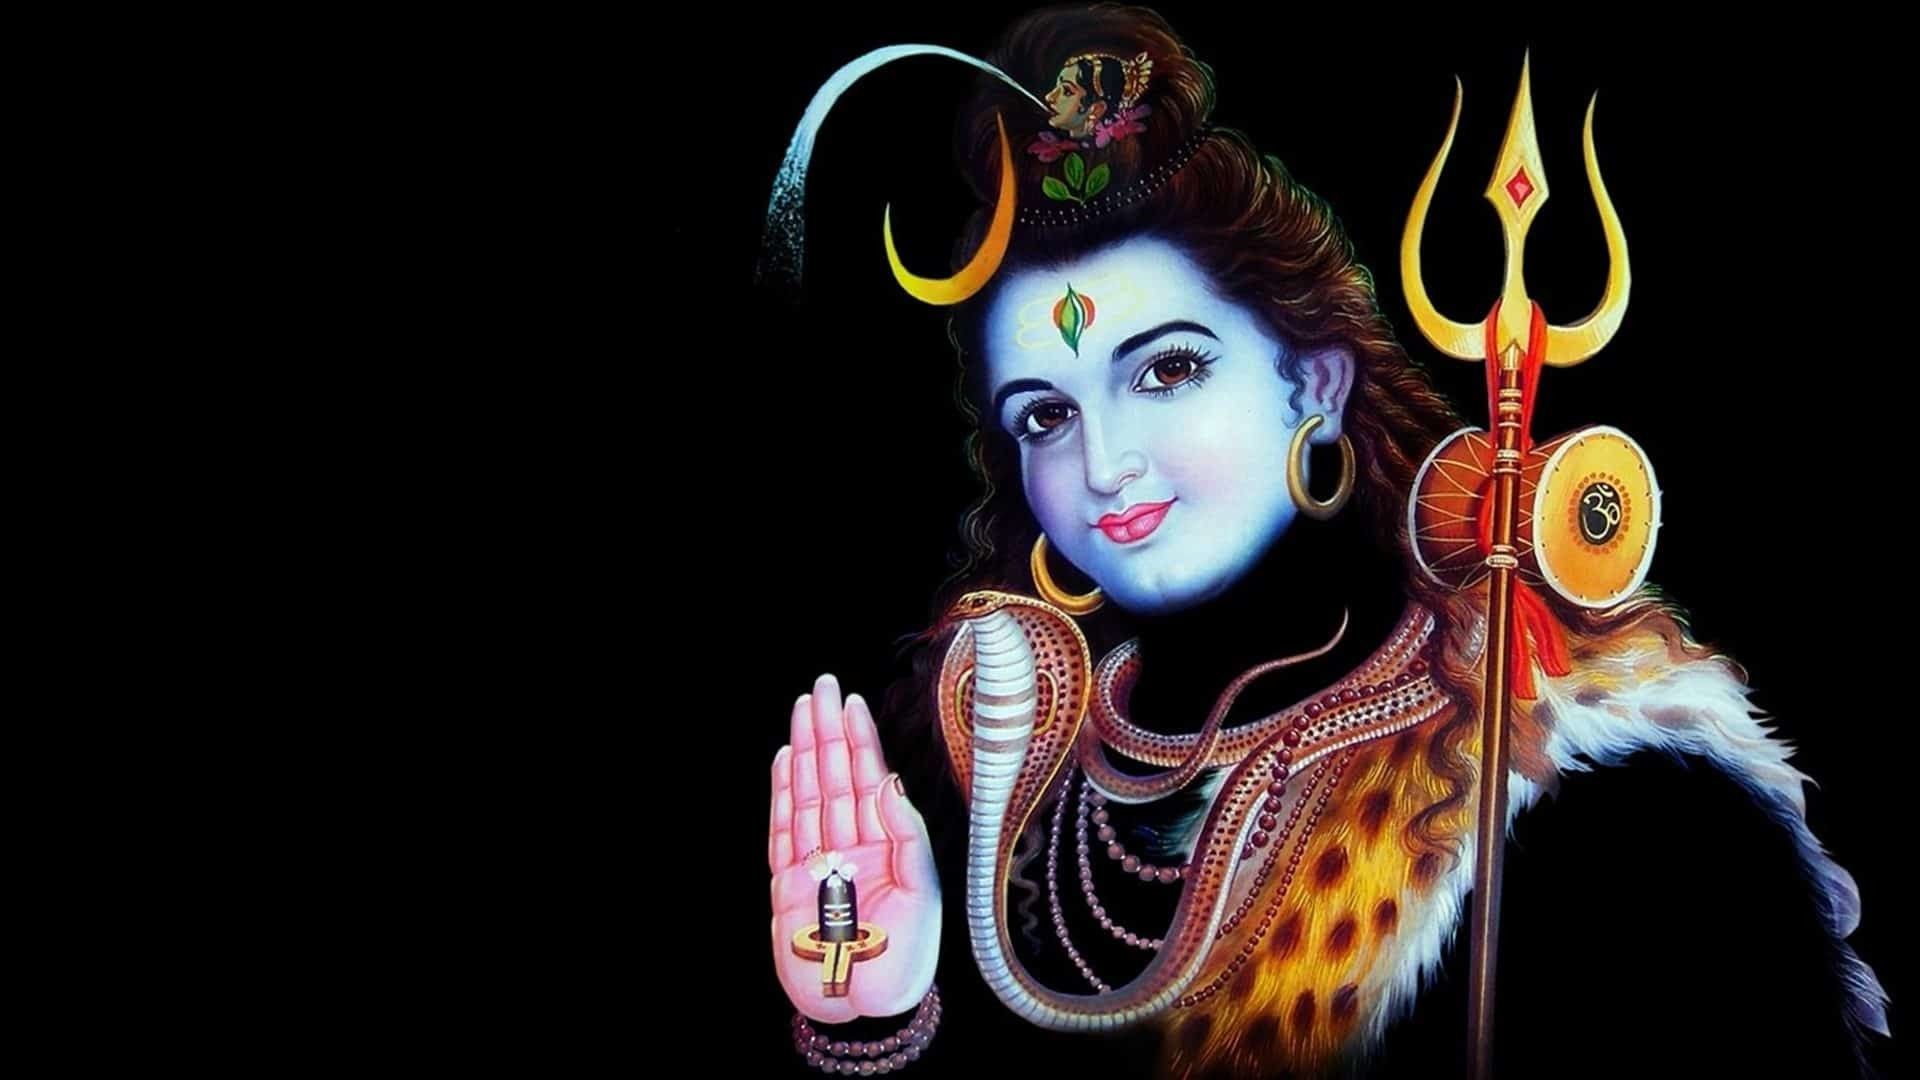 Pin by Narendra Pal Singh on Mahadev | Lord shiva hd wallpaper, Shiva lord  wallpapers, Lord shiva hd images